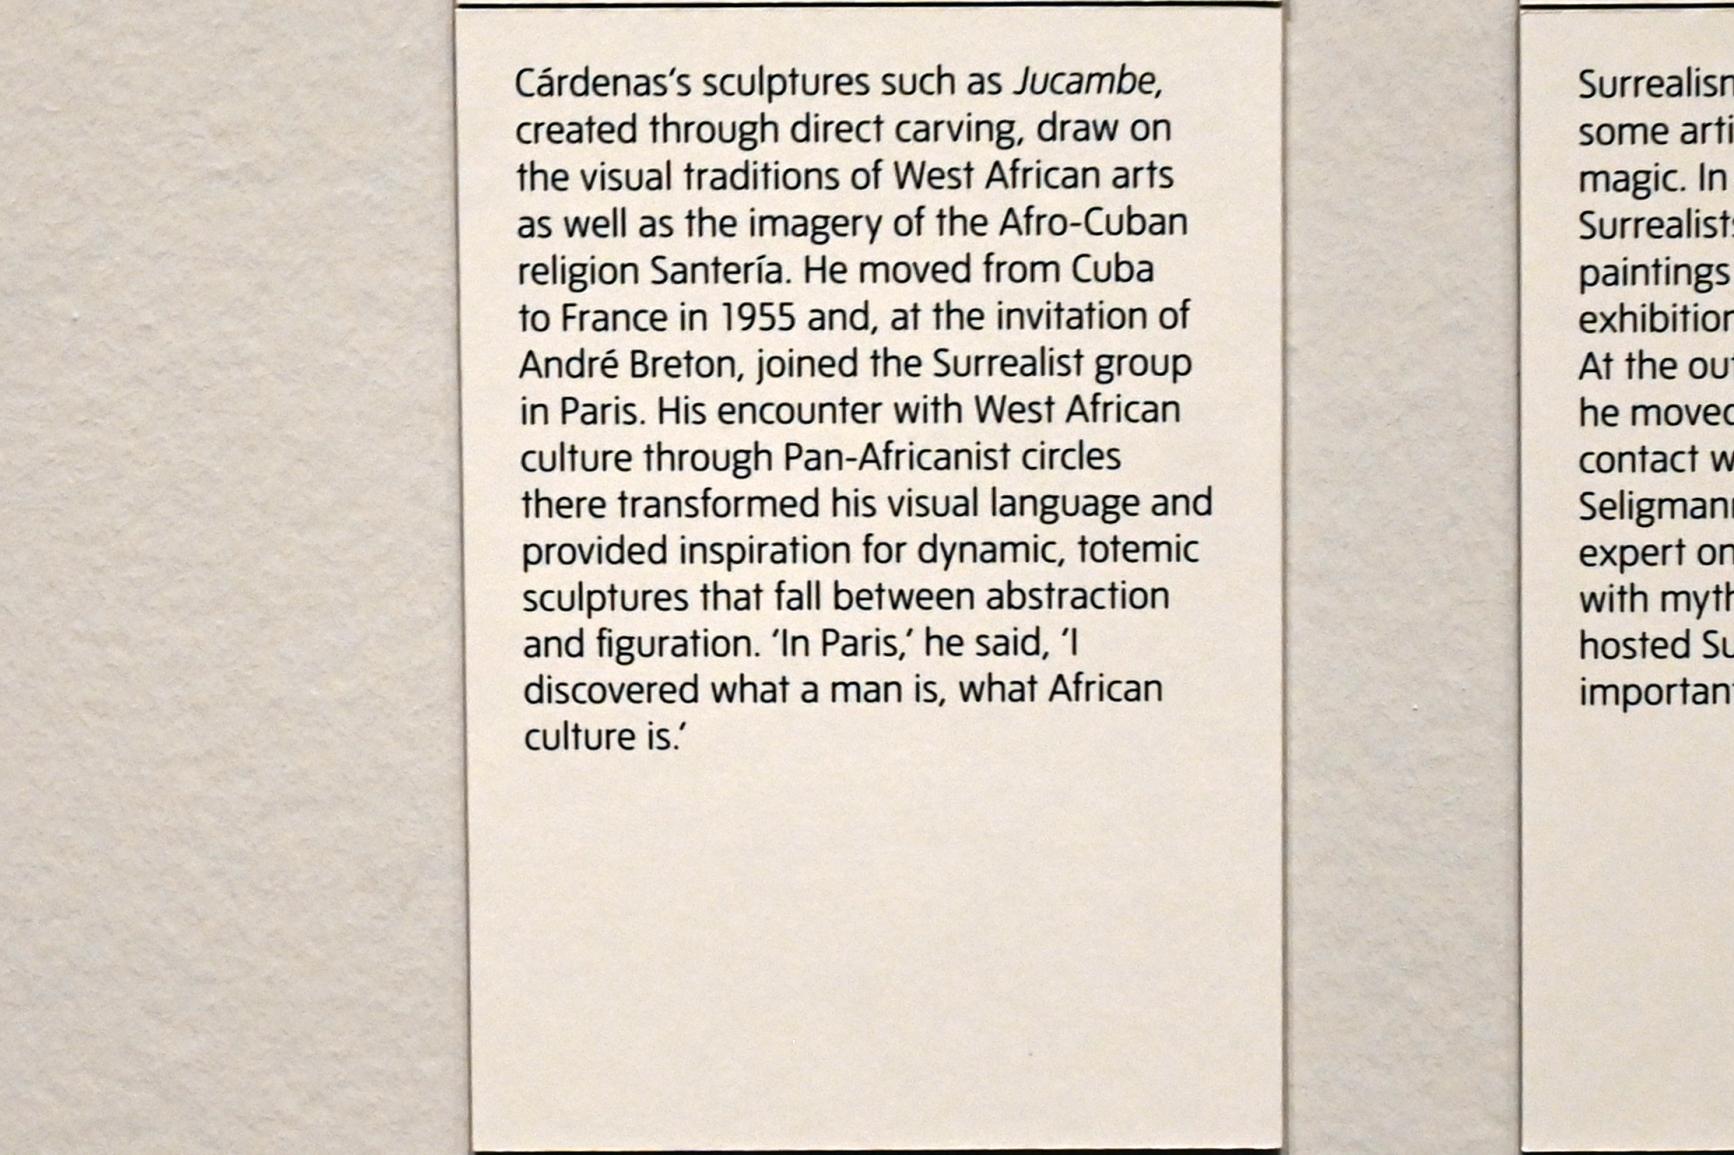 Agustín Cárdenas (1958), Jucambe, London, Tate Modern, Ausstellung "Surrealism Beyond Borders" vom 24.02.-29.08.2022, Saal 11, 1958, Bild 5/6